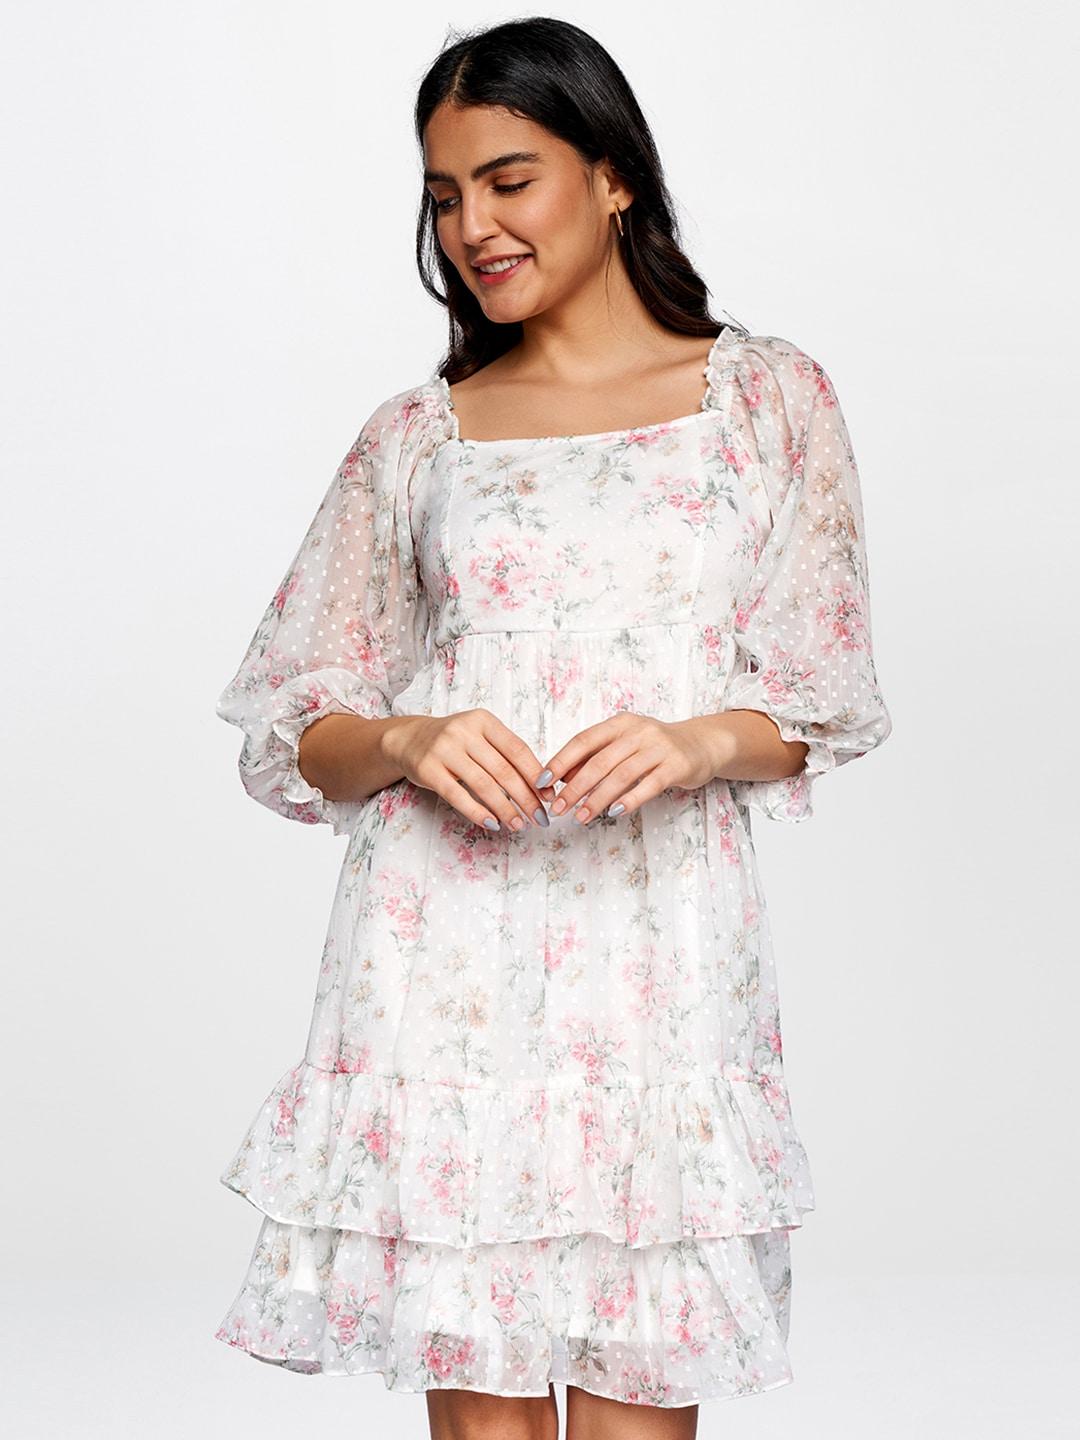 and-white-&-pink-floral-print-flounce-hem-dress